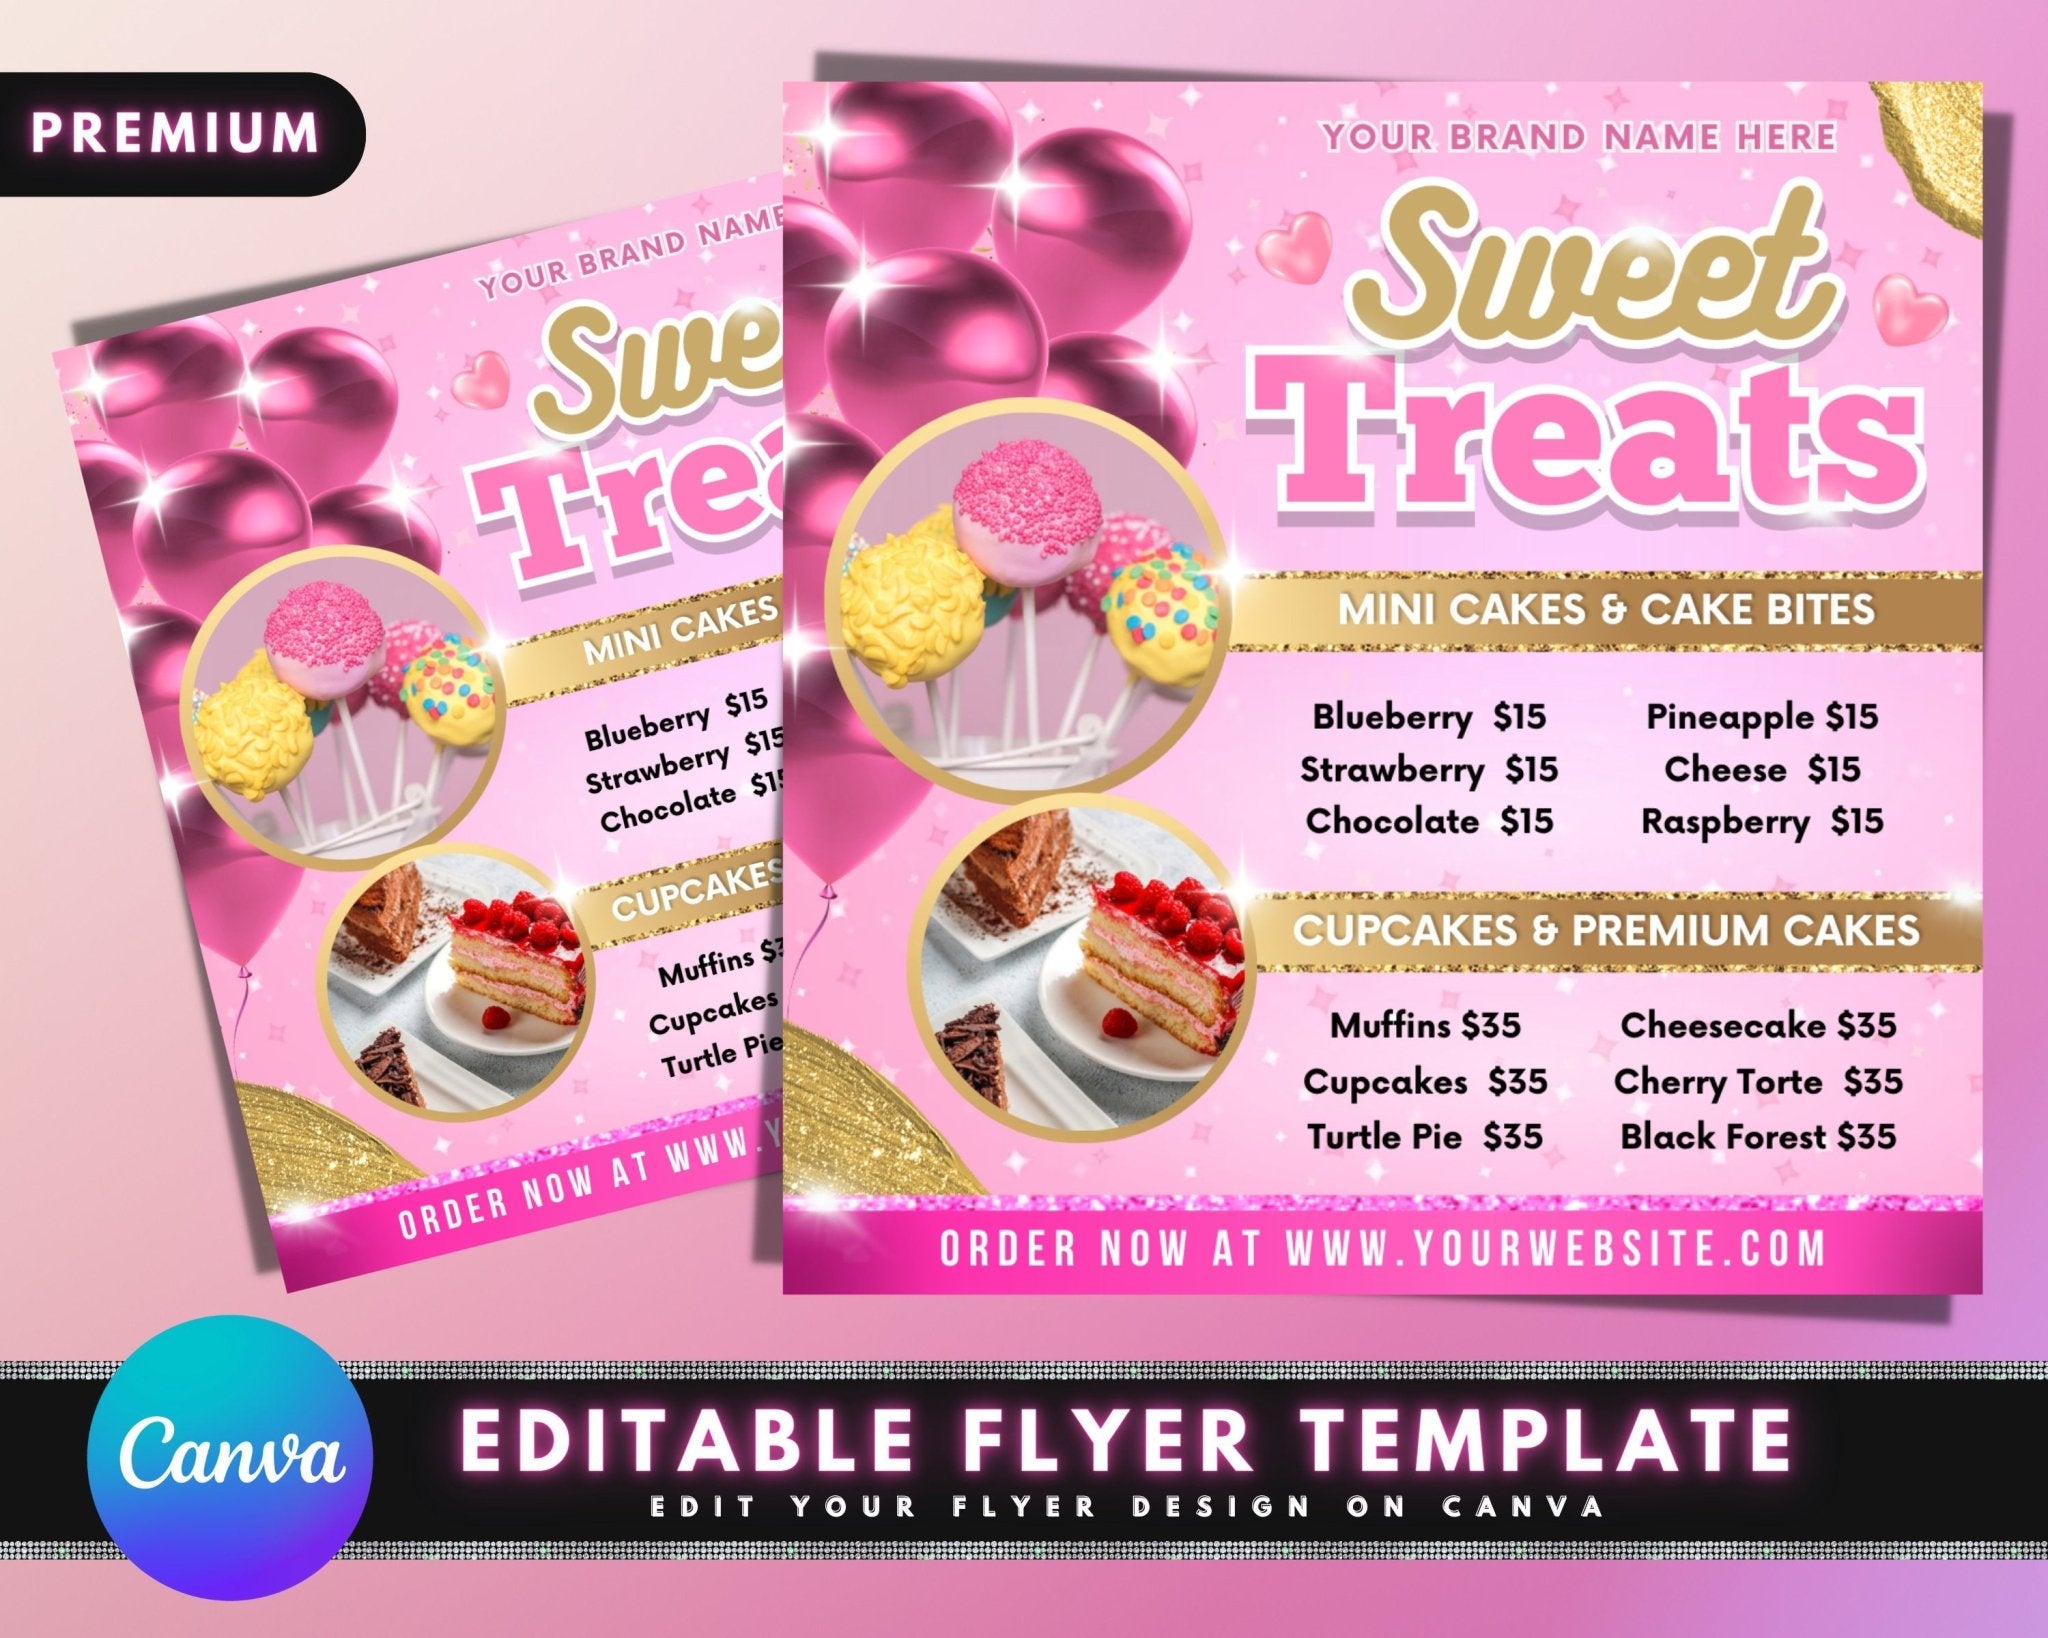 Cake Shop Flyer Design Images, HD Pictures For Free Vectors Download -  Lovepik.com